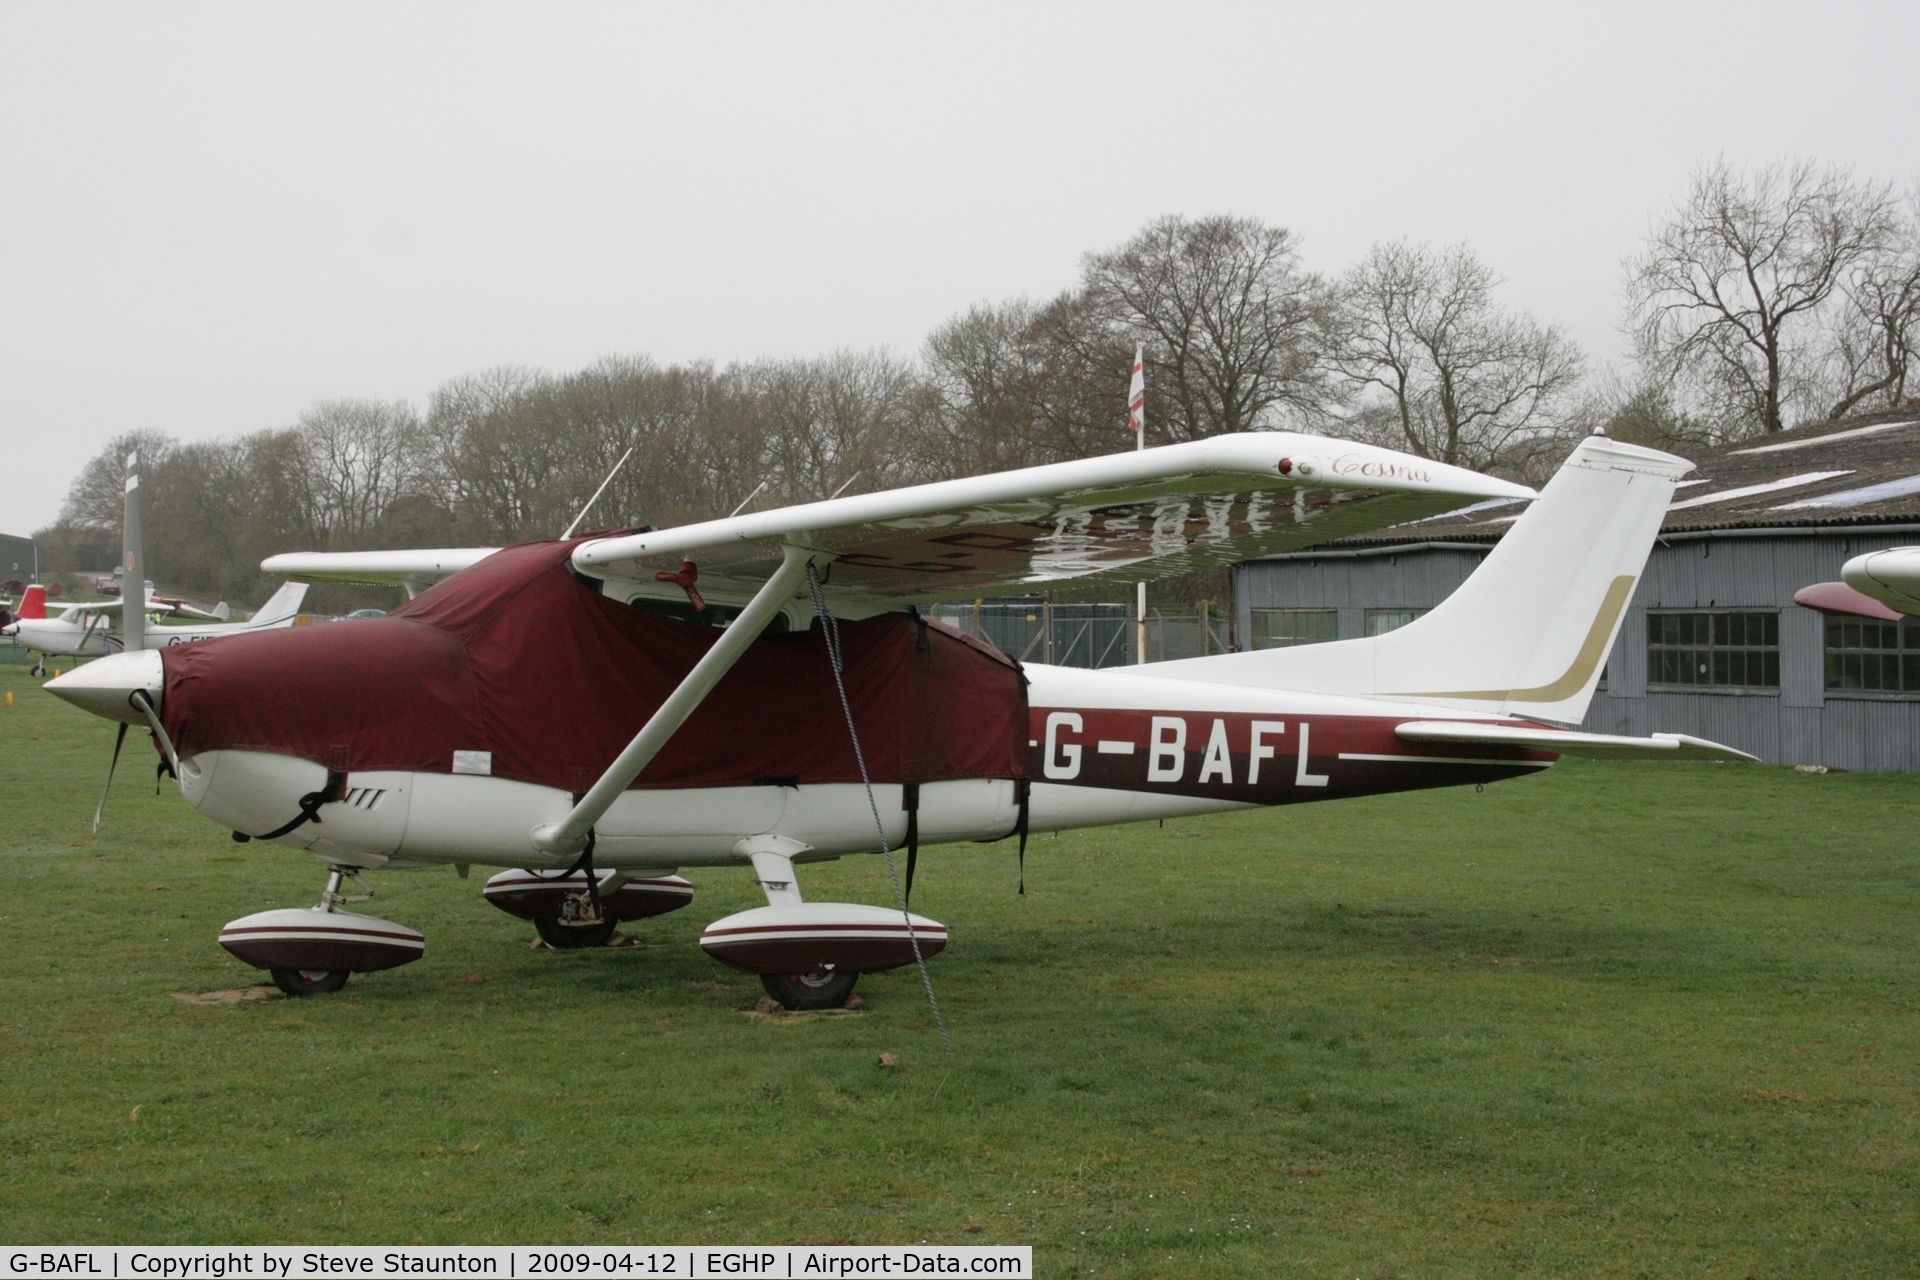 G-BAFL, 1973 Cessna 182P Skylane C/N 182-61469, Taken at Popham Airfield, England on a gloomy April Sunday (12/04/09)